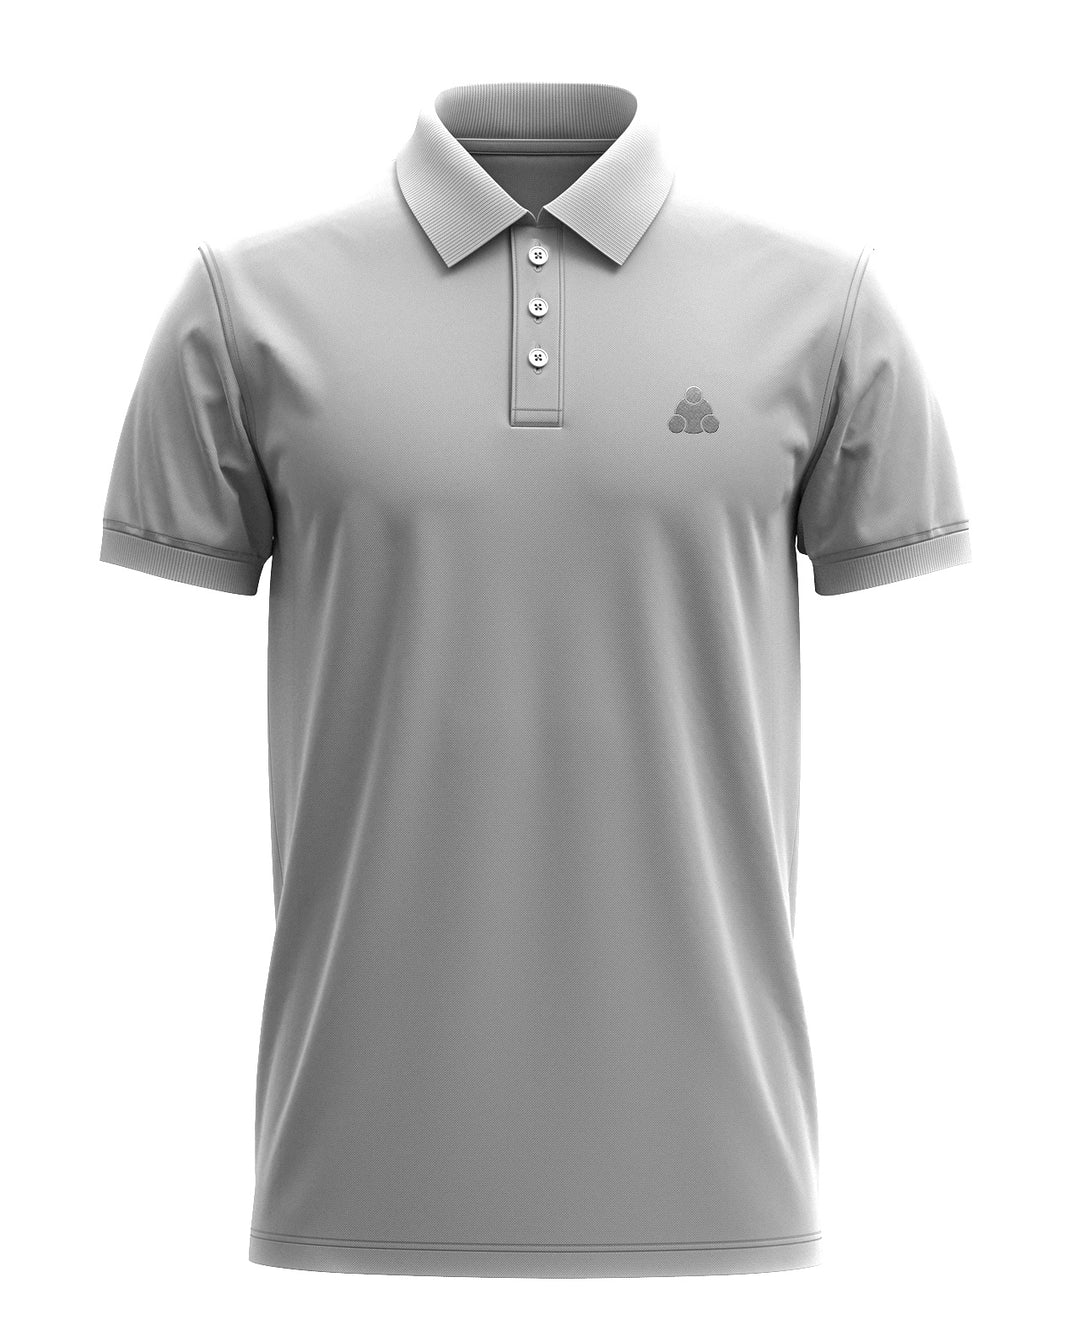 Trinizen Basics Polo T-shirt Embroidered Logo - Grey melange